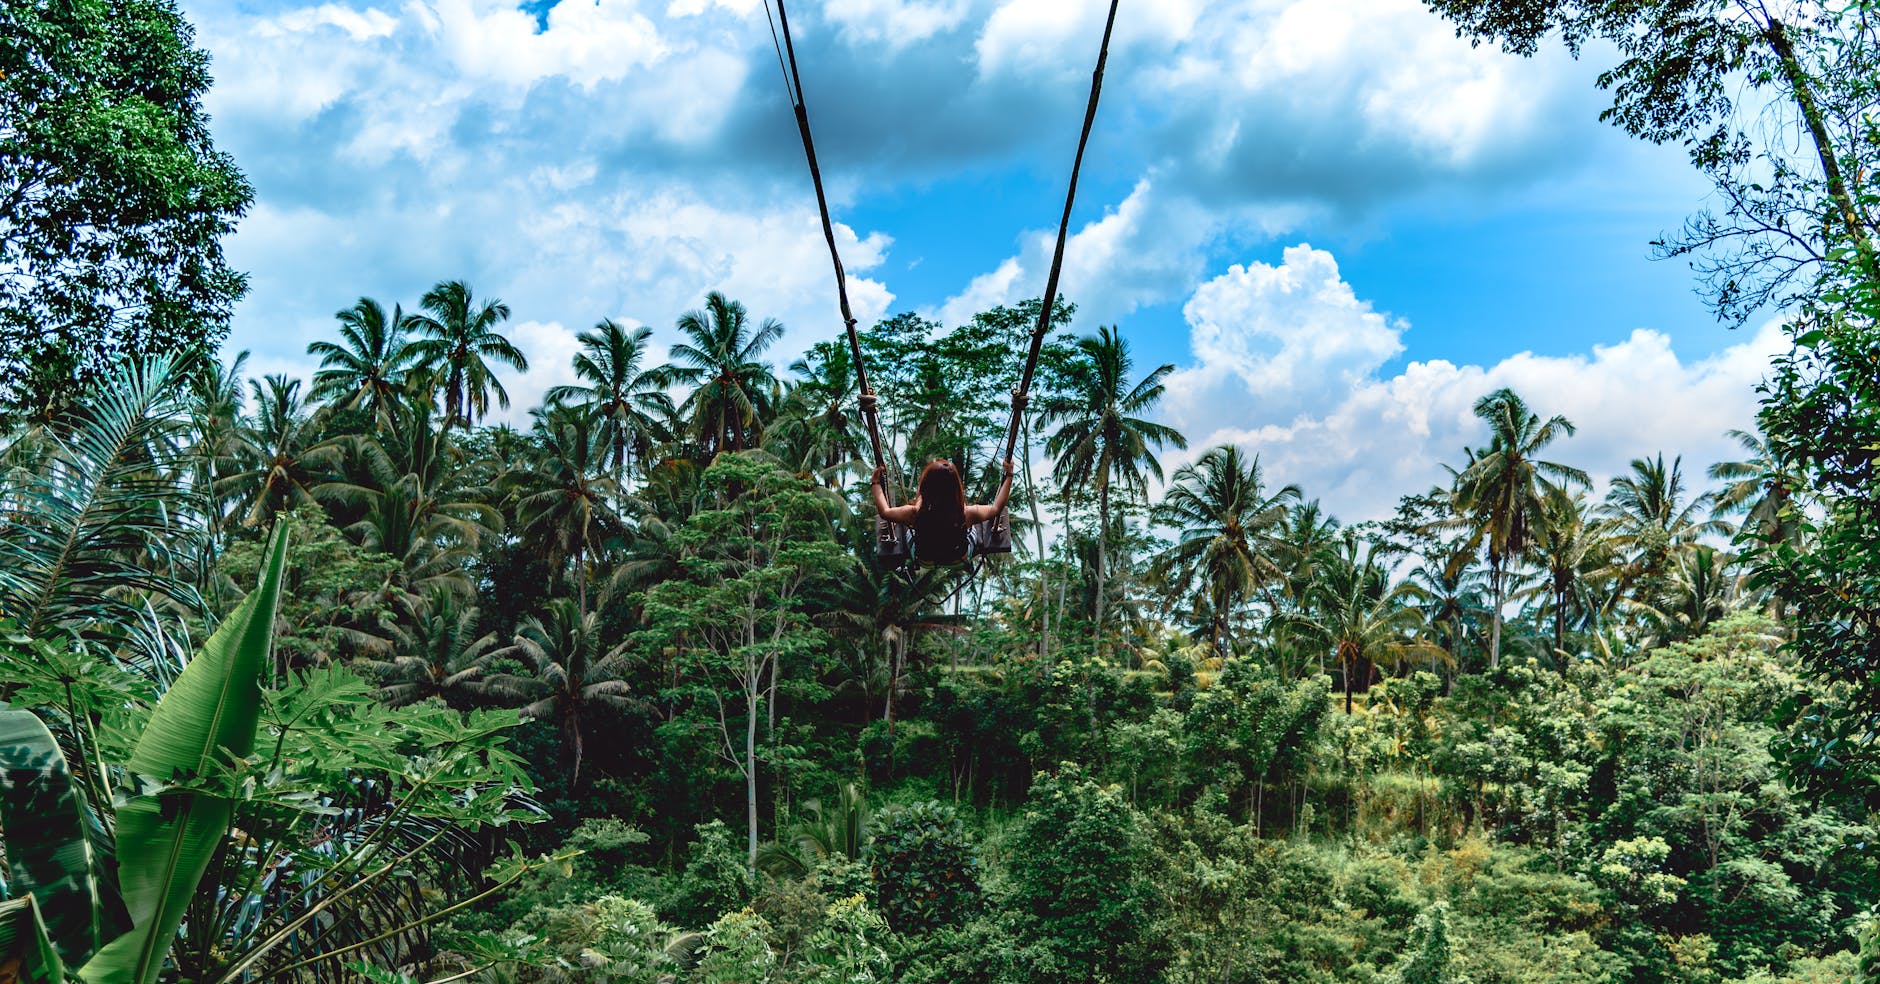 Tropical Rainforest, One of Earth's Large Biome - Taman Safari Bali